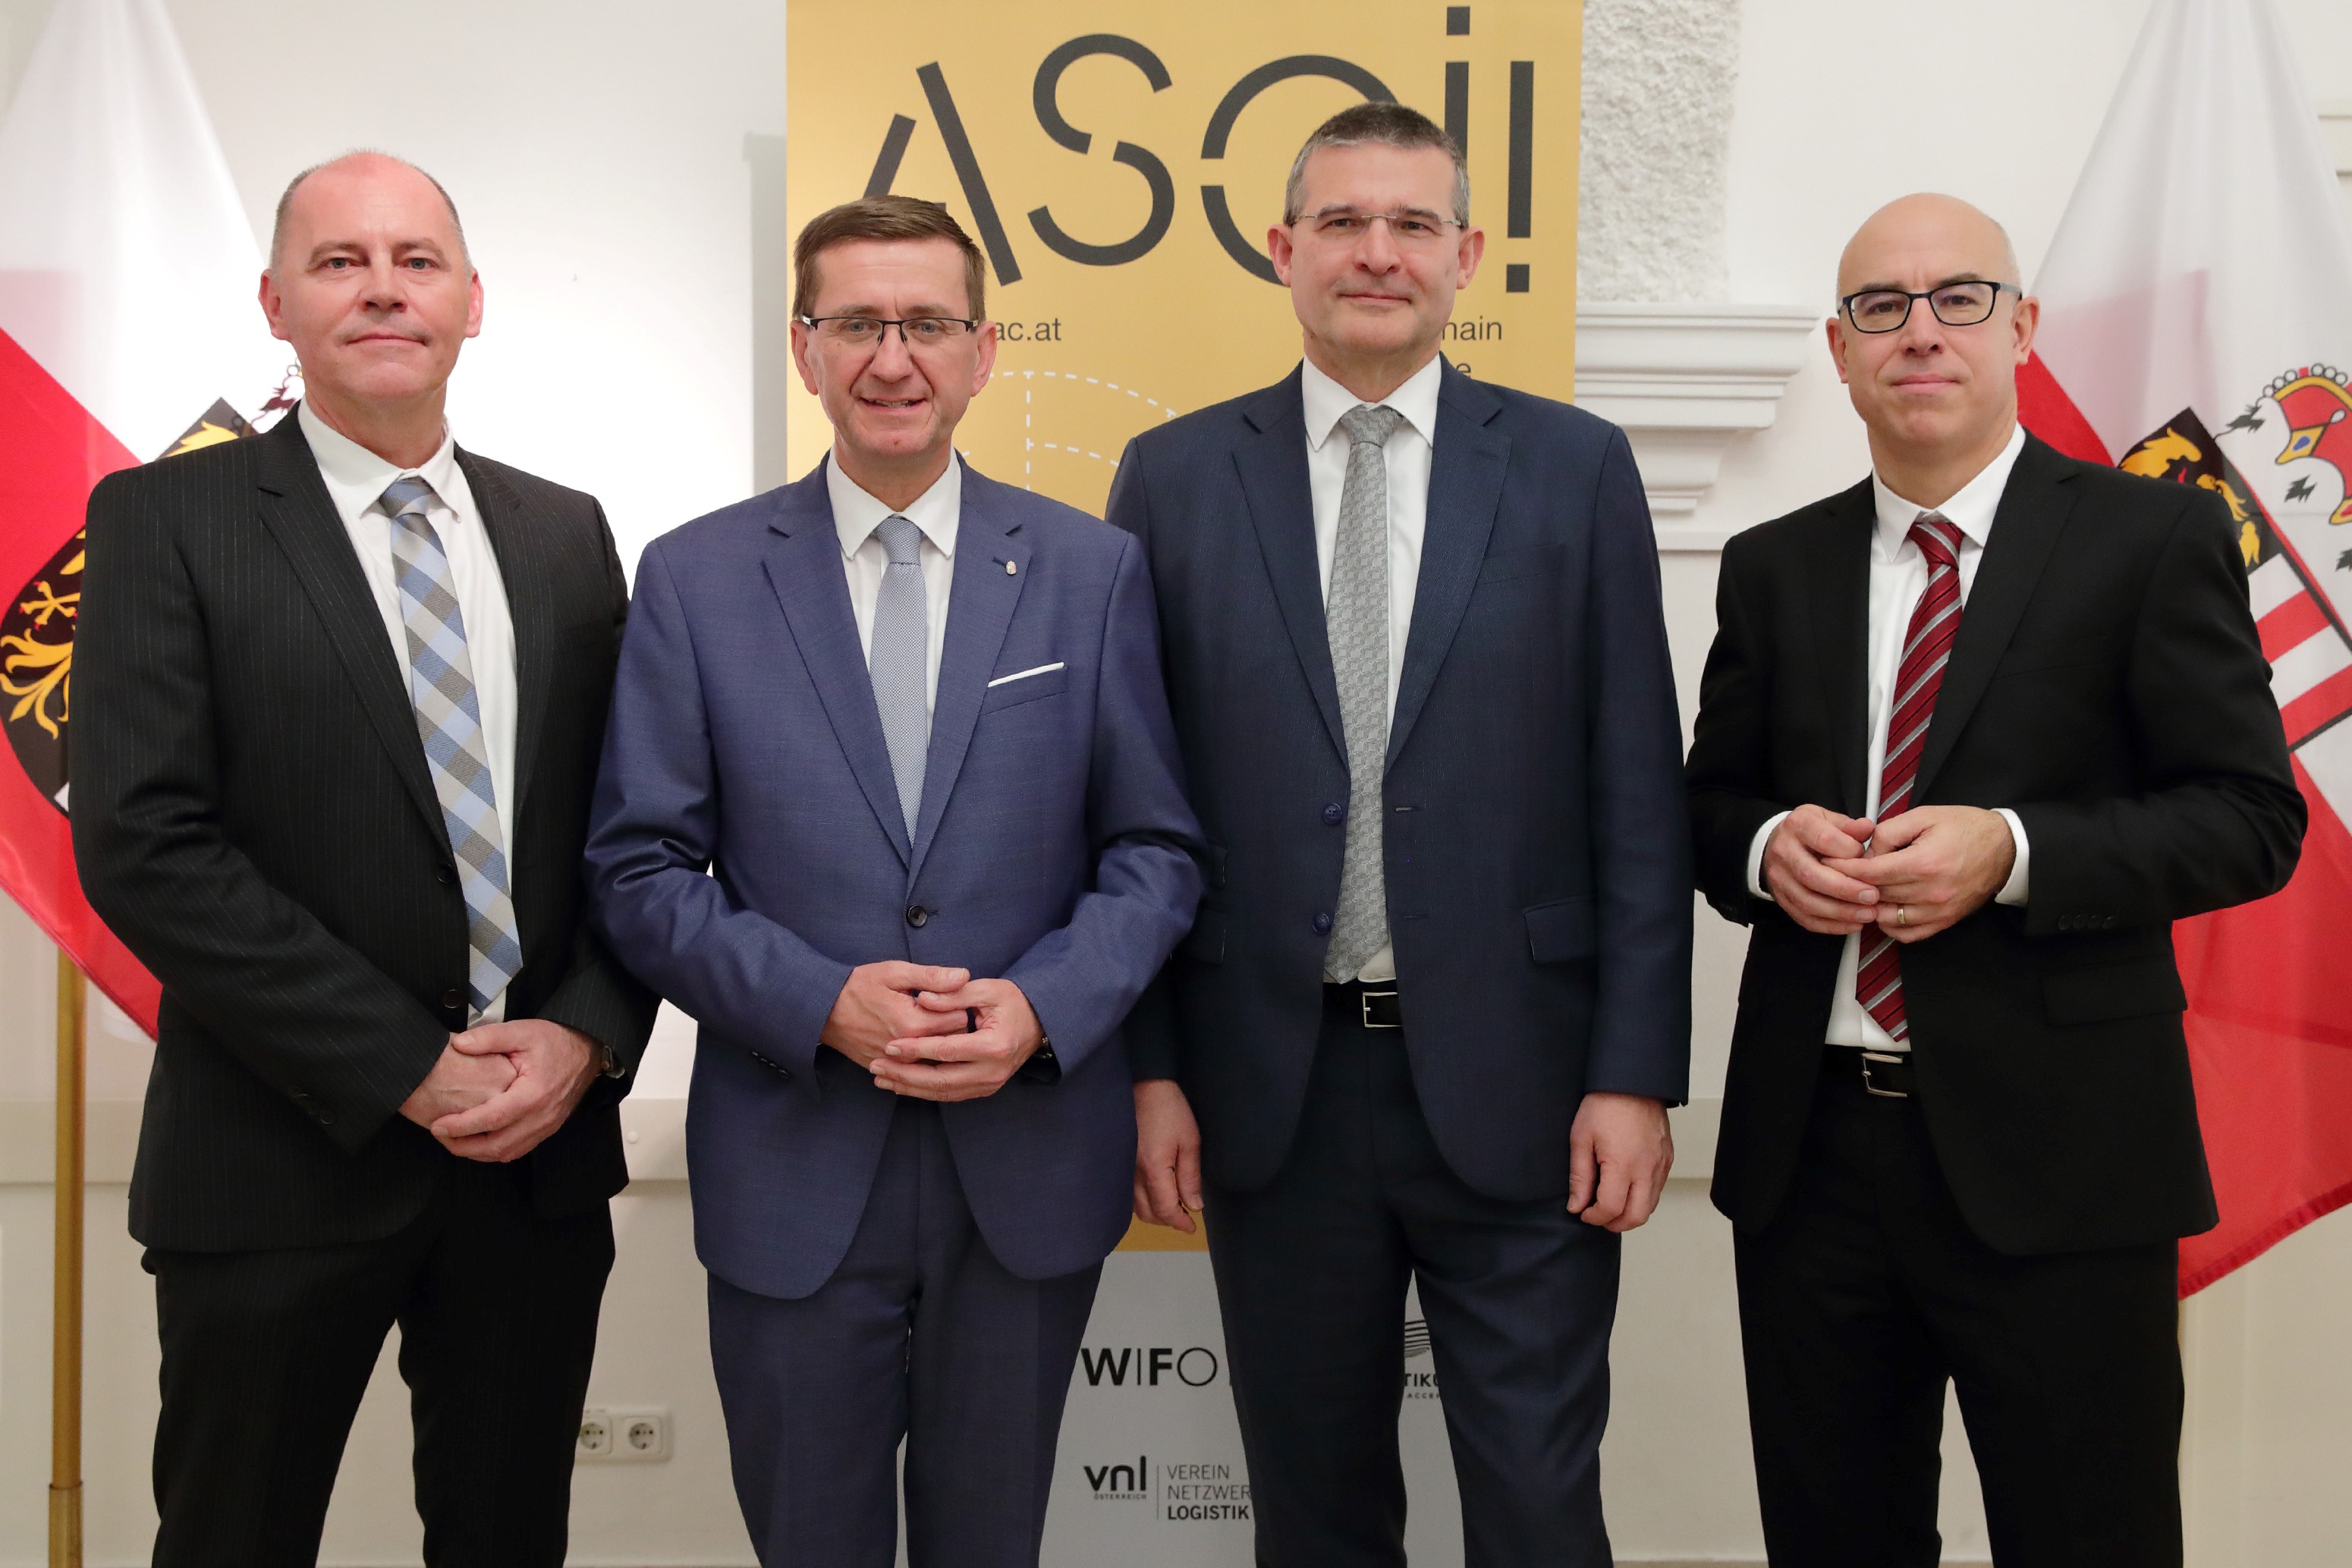 Franz Staberhofer ist neuer Präsident des Lieferketten-Forschungsinstitutes ASCII